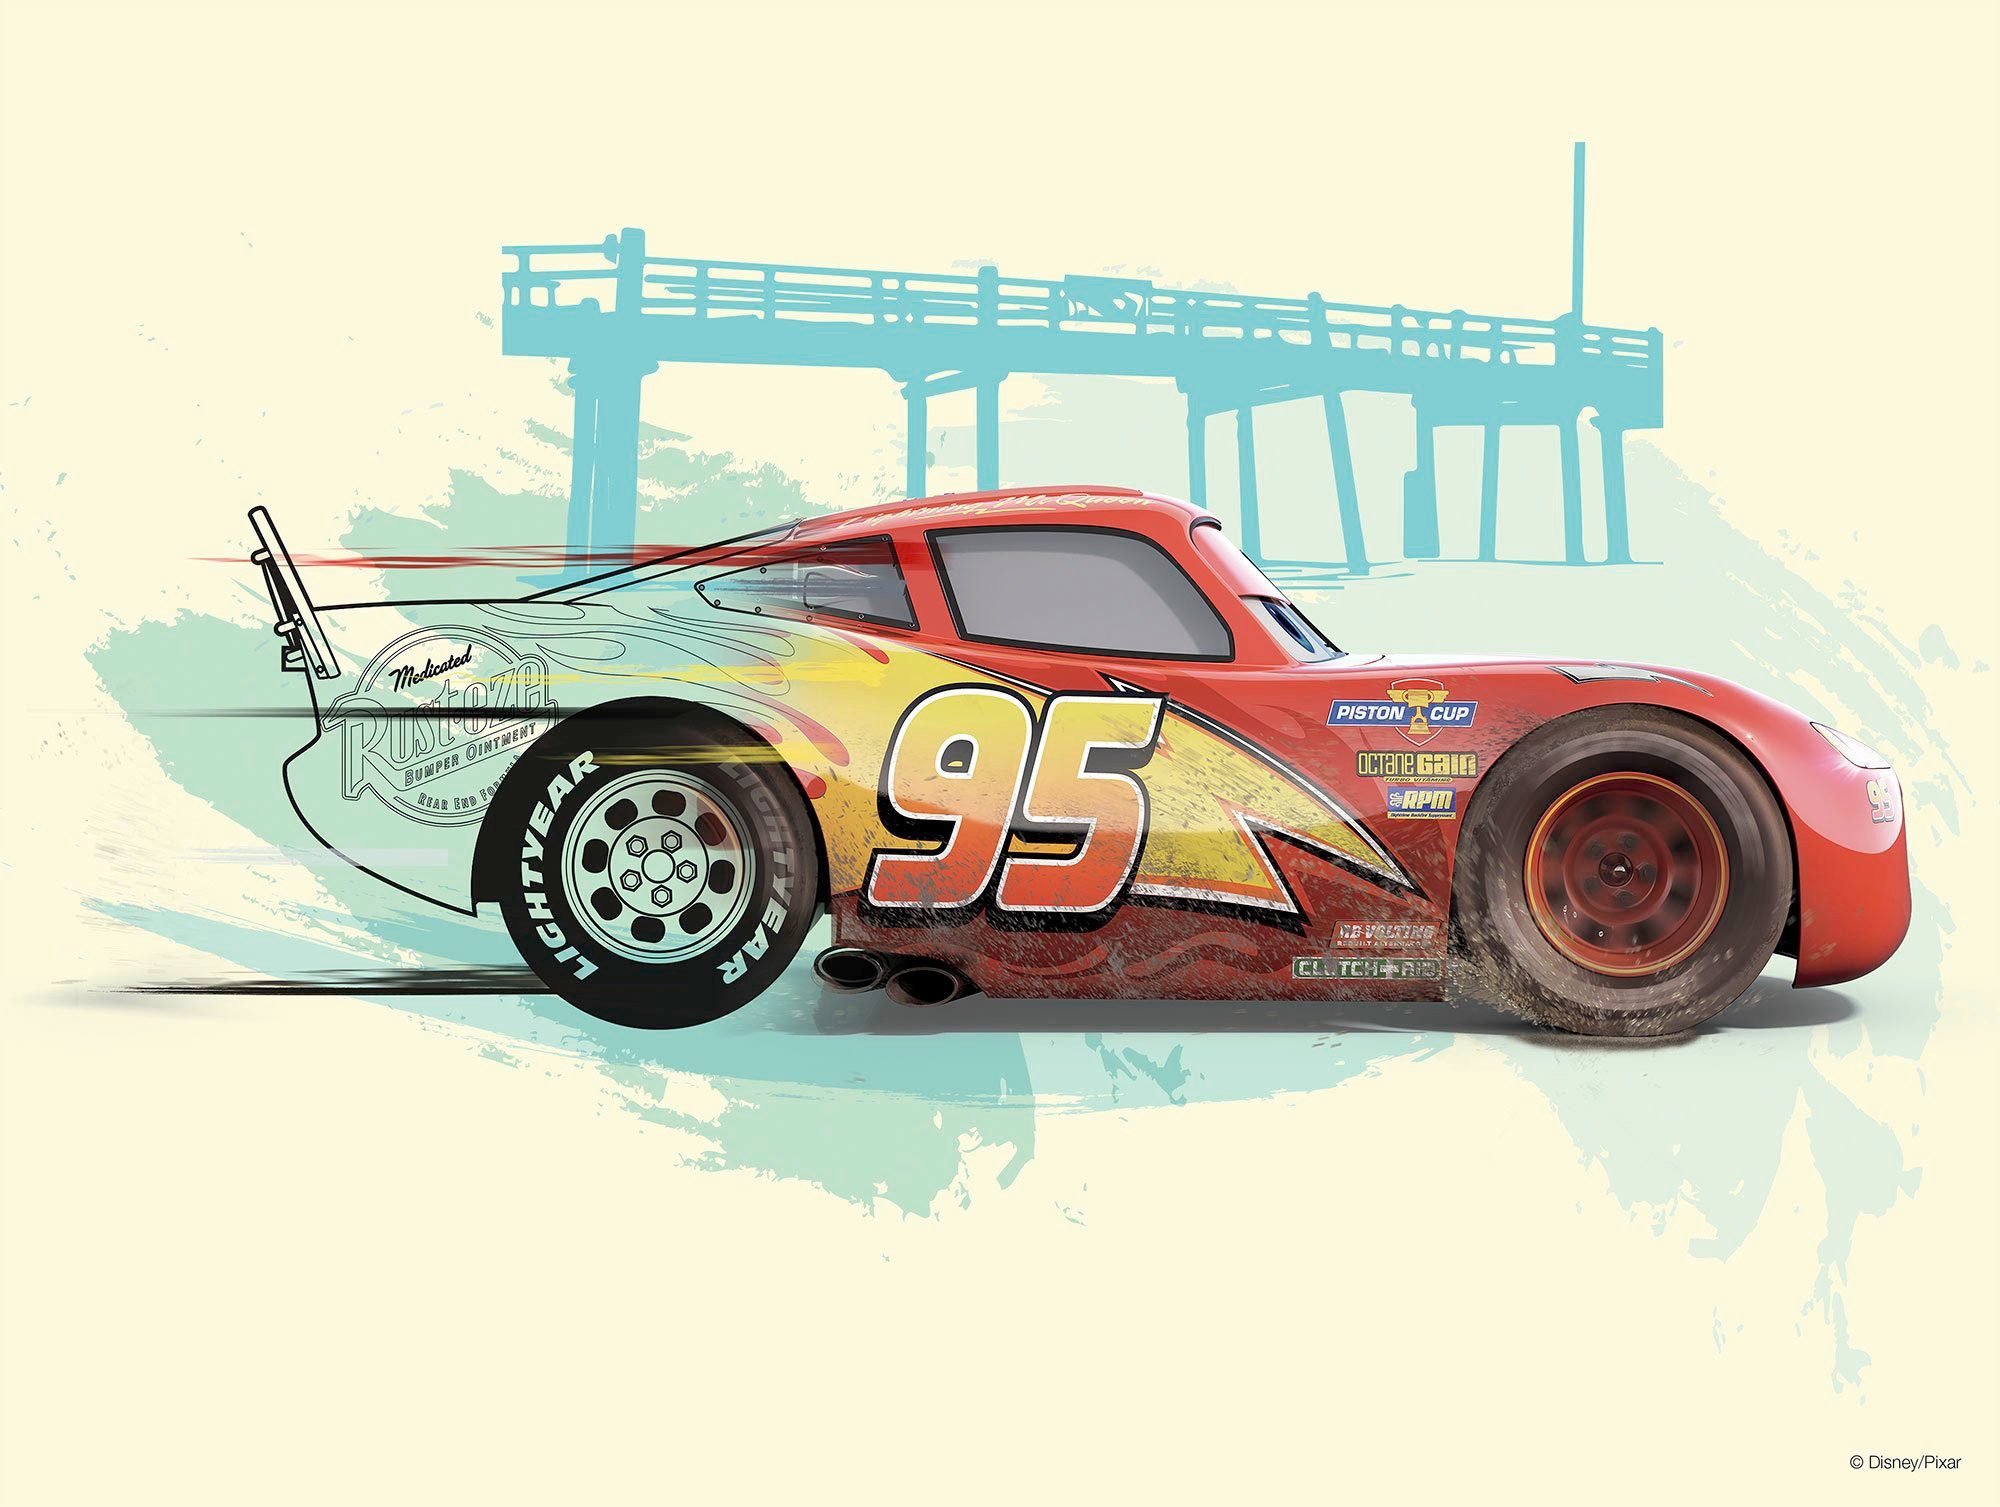 Komar Artprint Cars Lightning McQueen